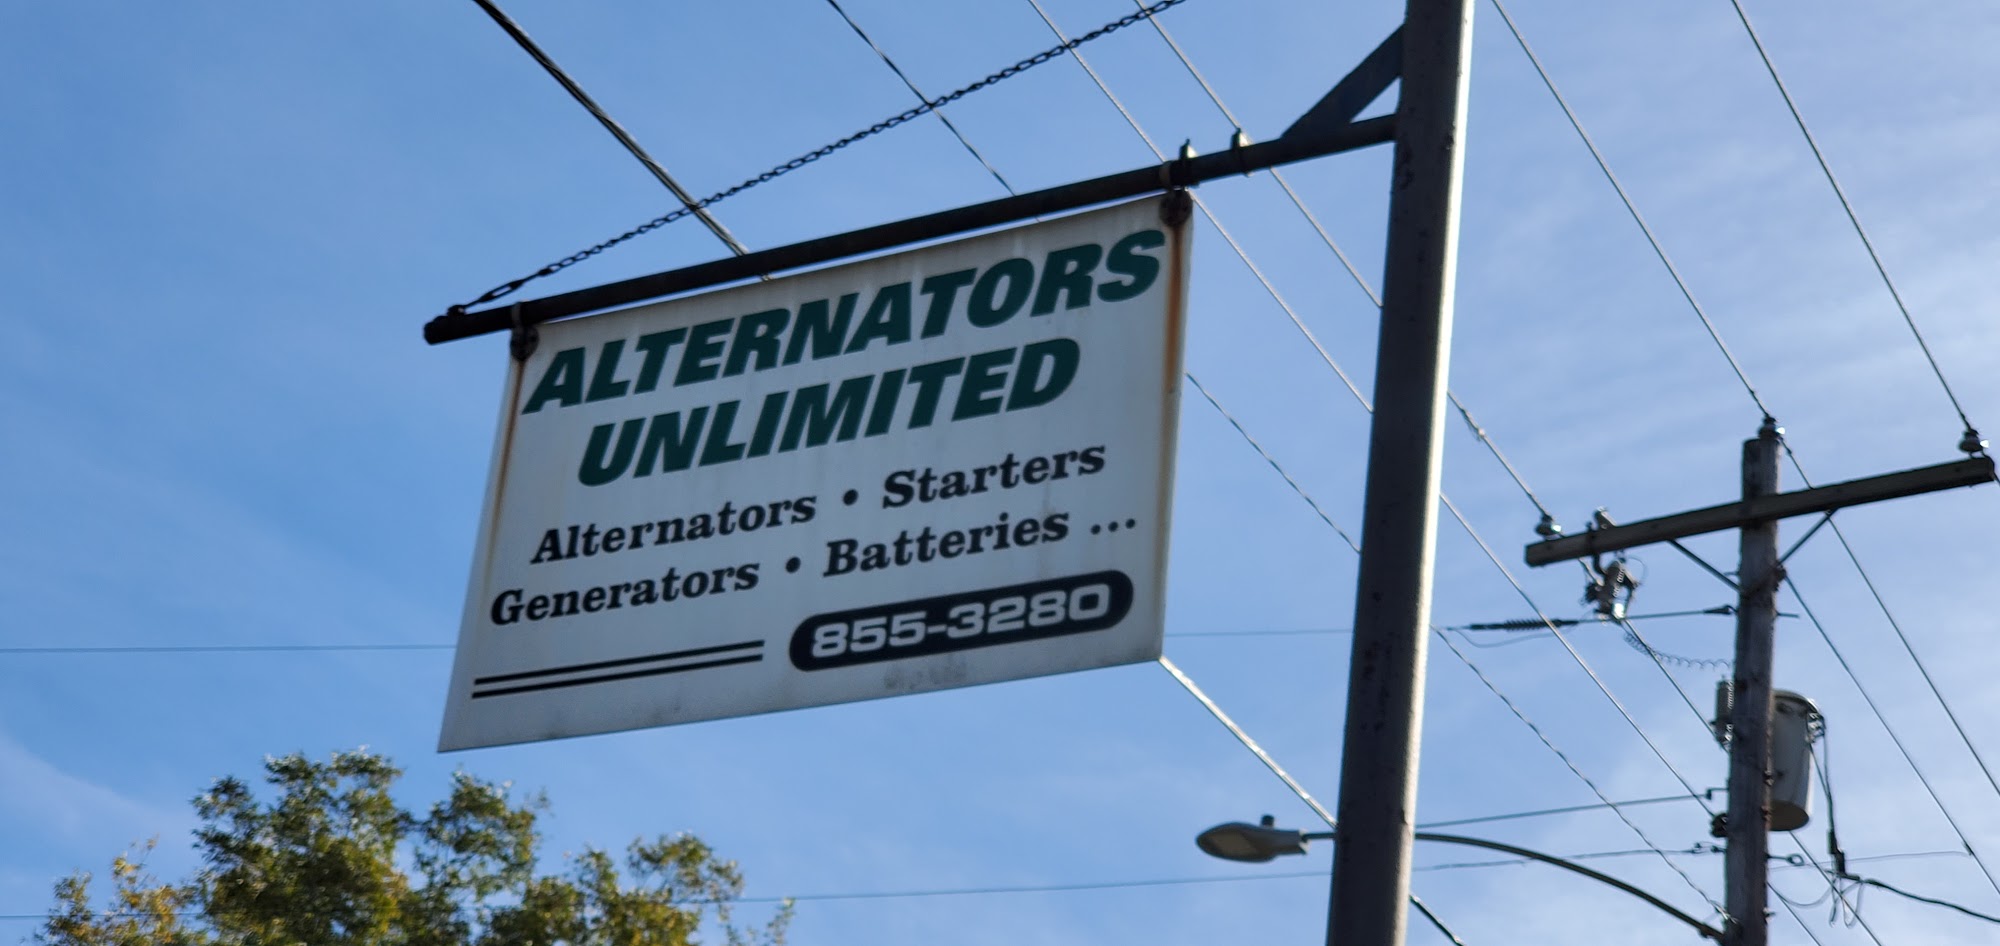 Alternators Unlimited